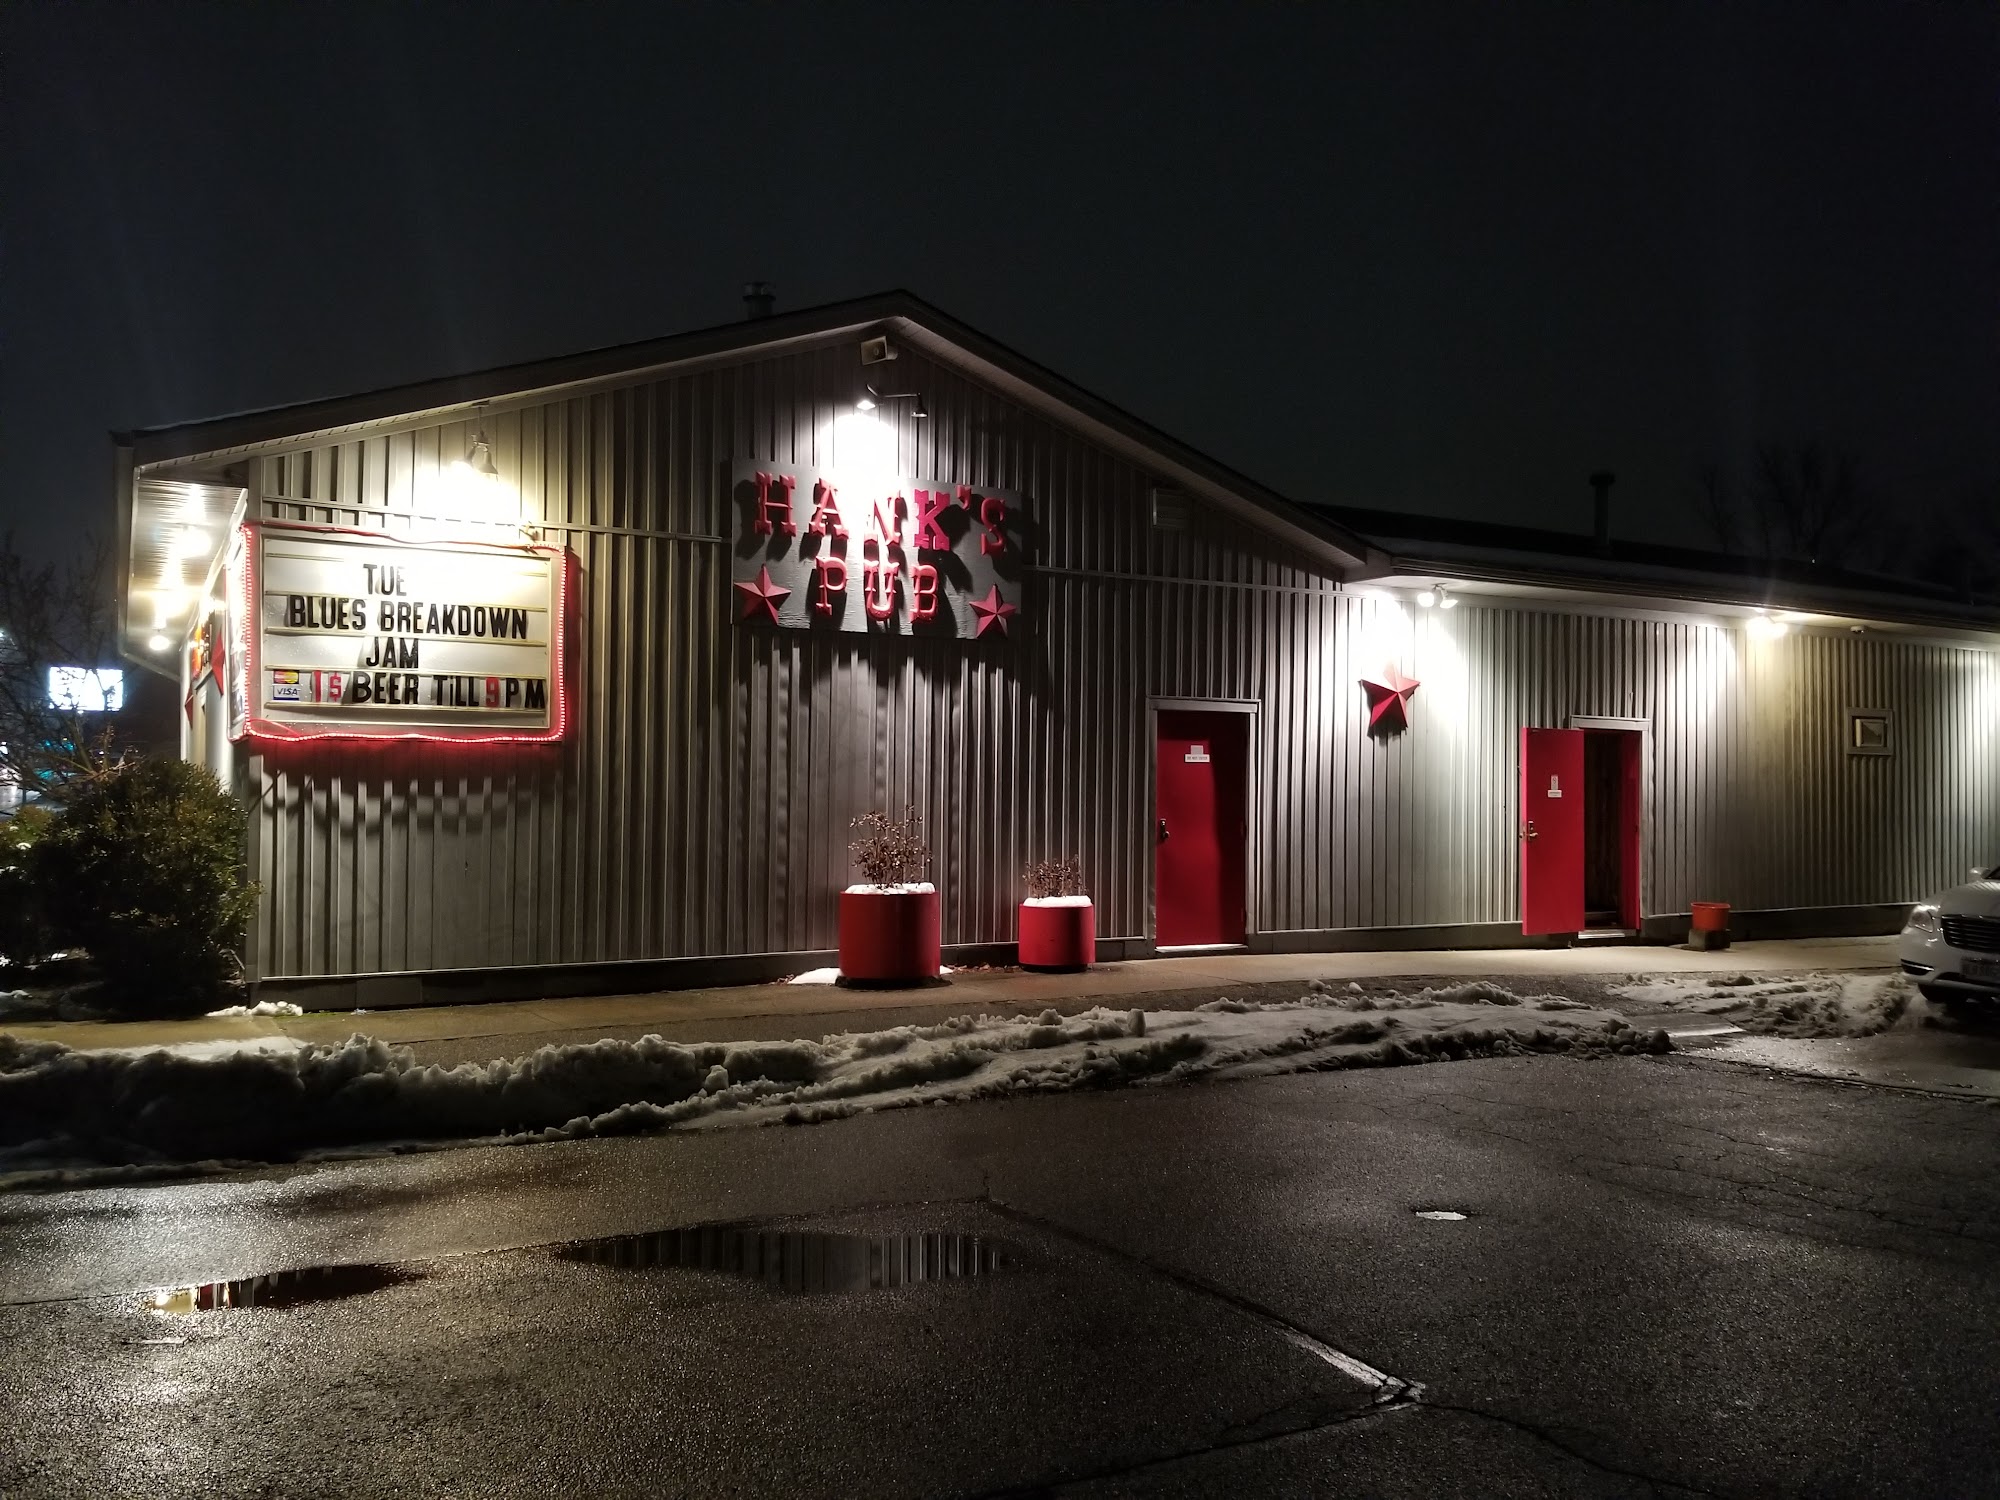 Hank's Local Bar+Food+Patio